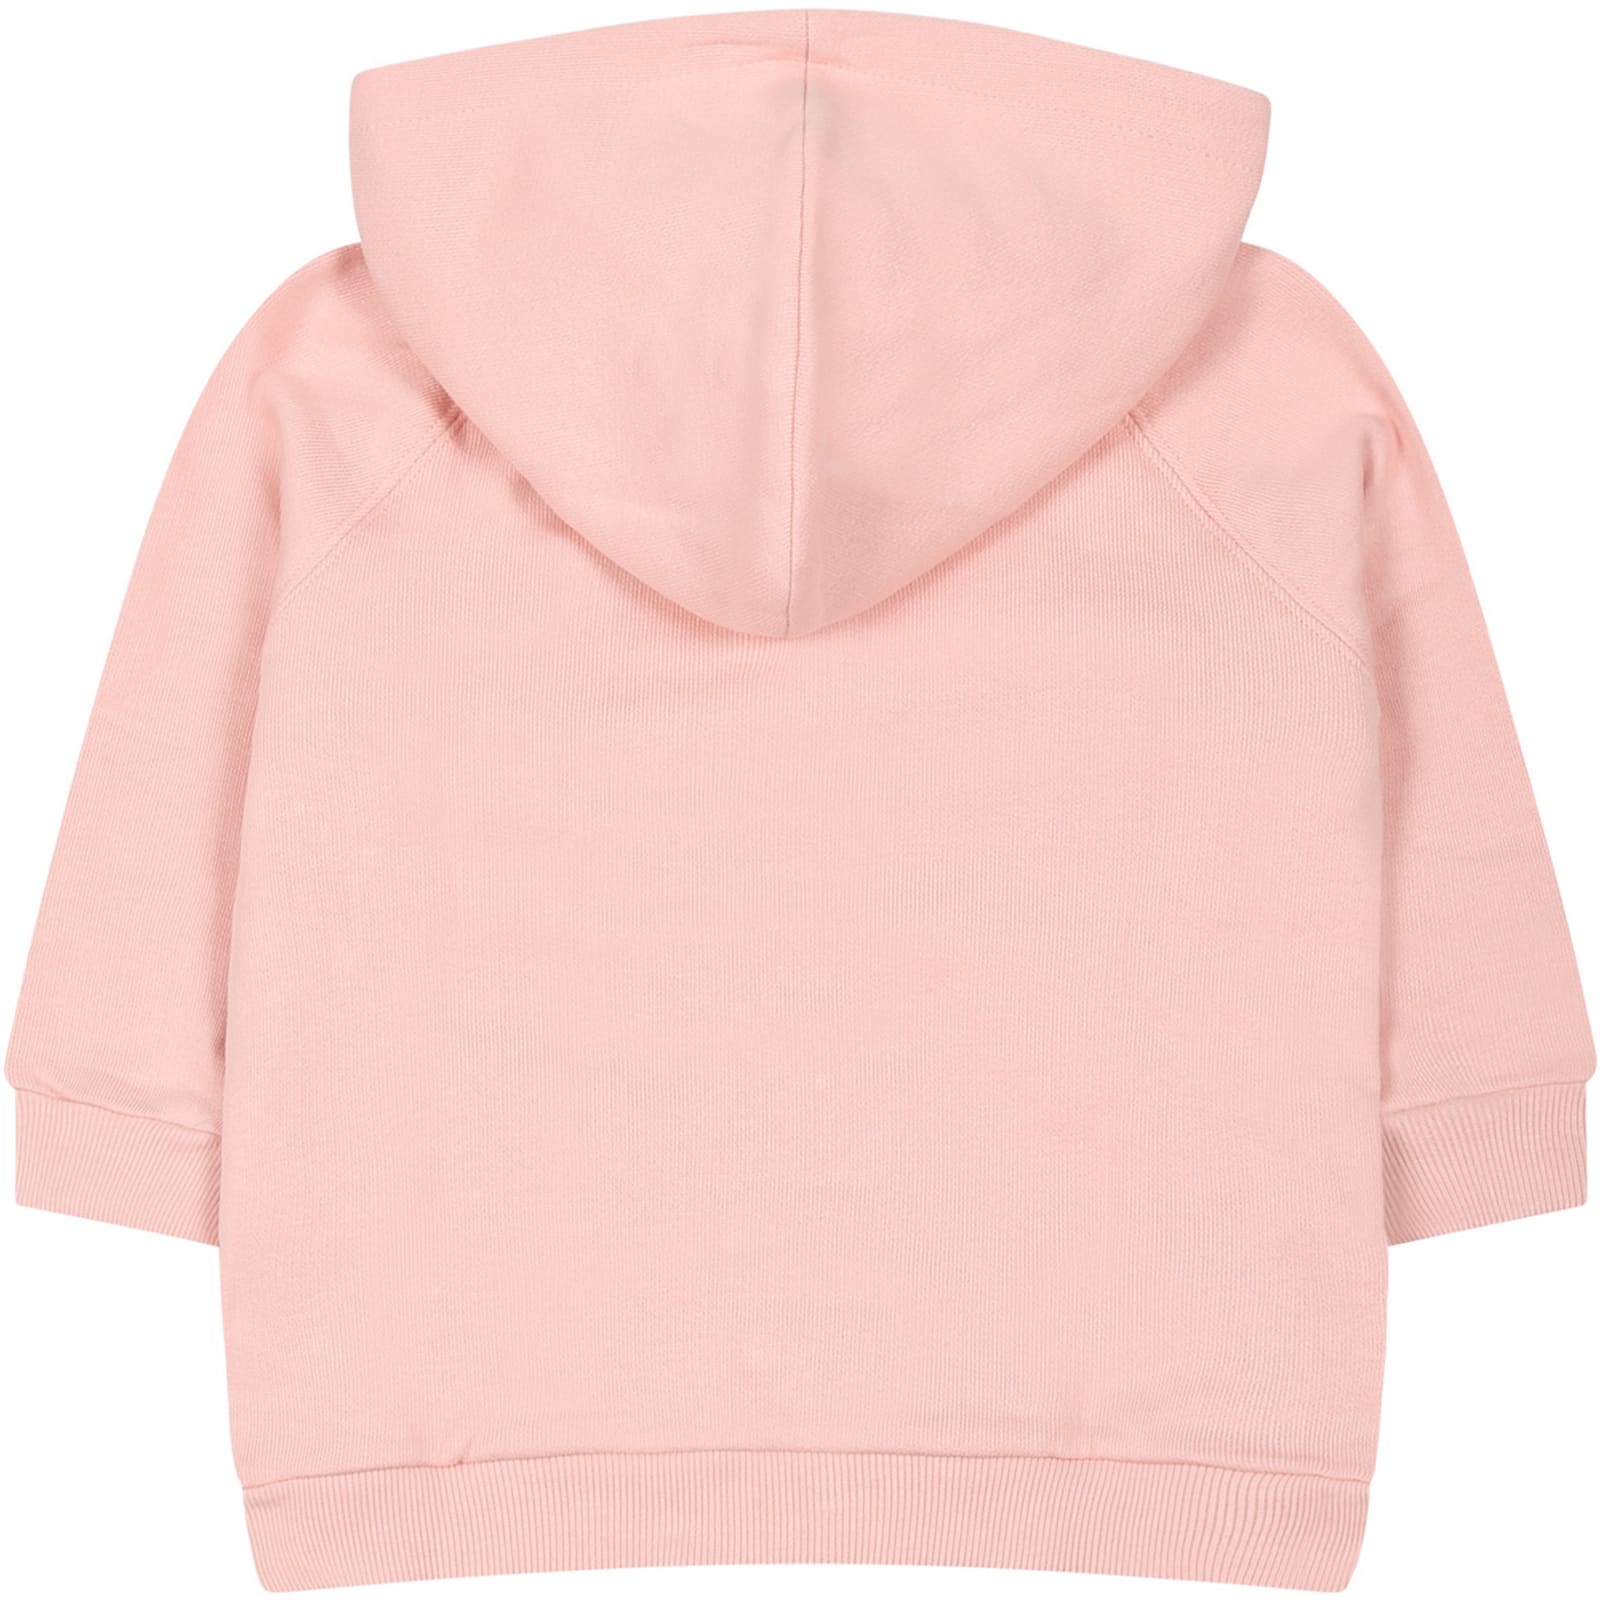 Shop Gucci Pink Sweatshirt For Baby Girl With Interlocking Gg